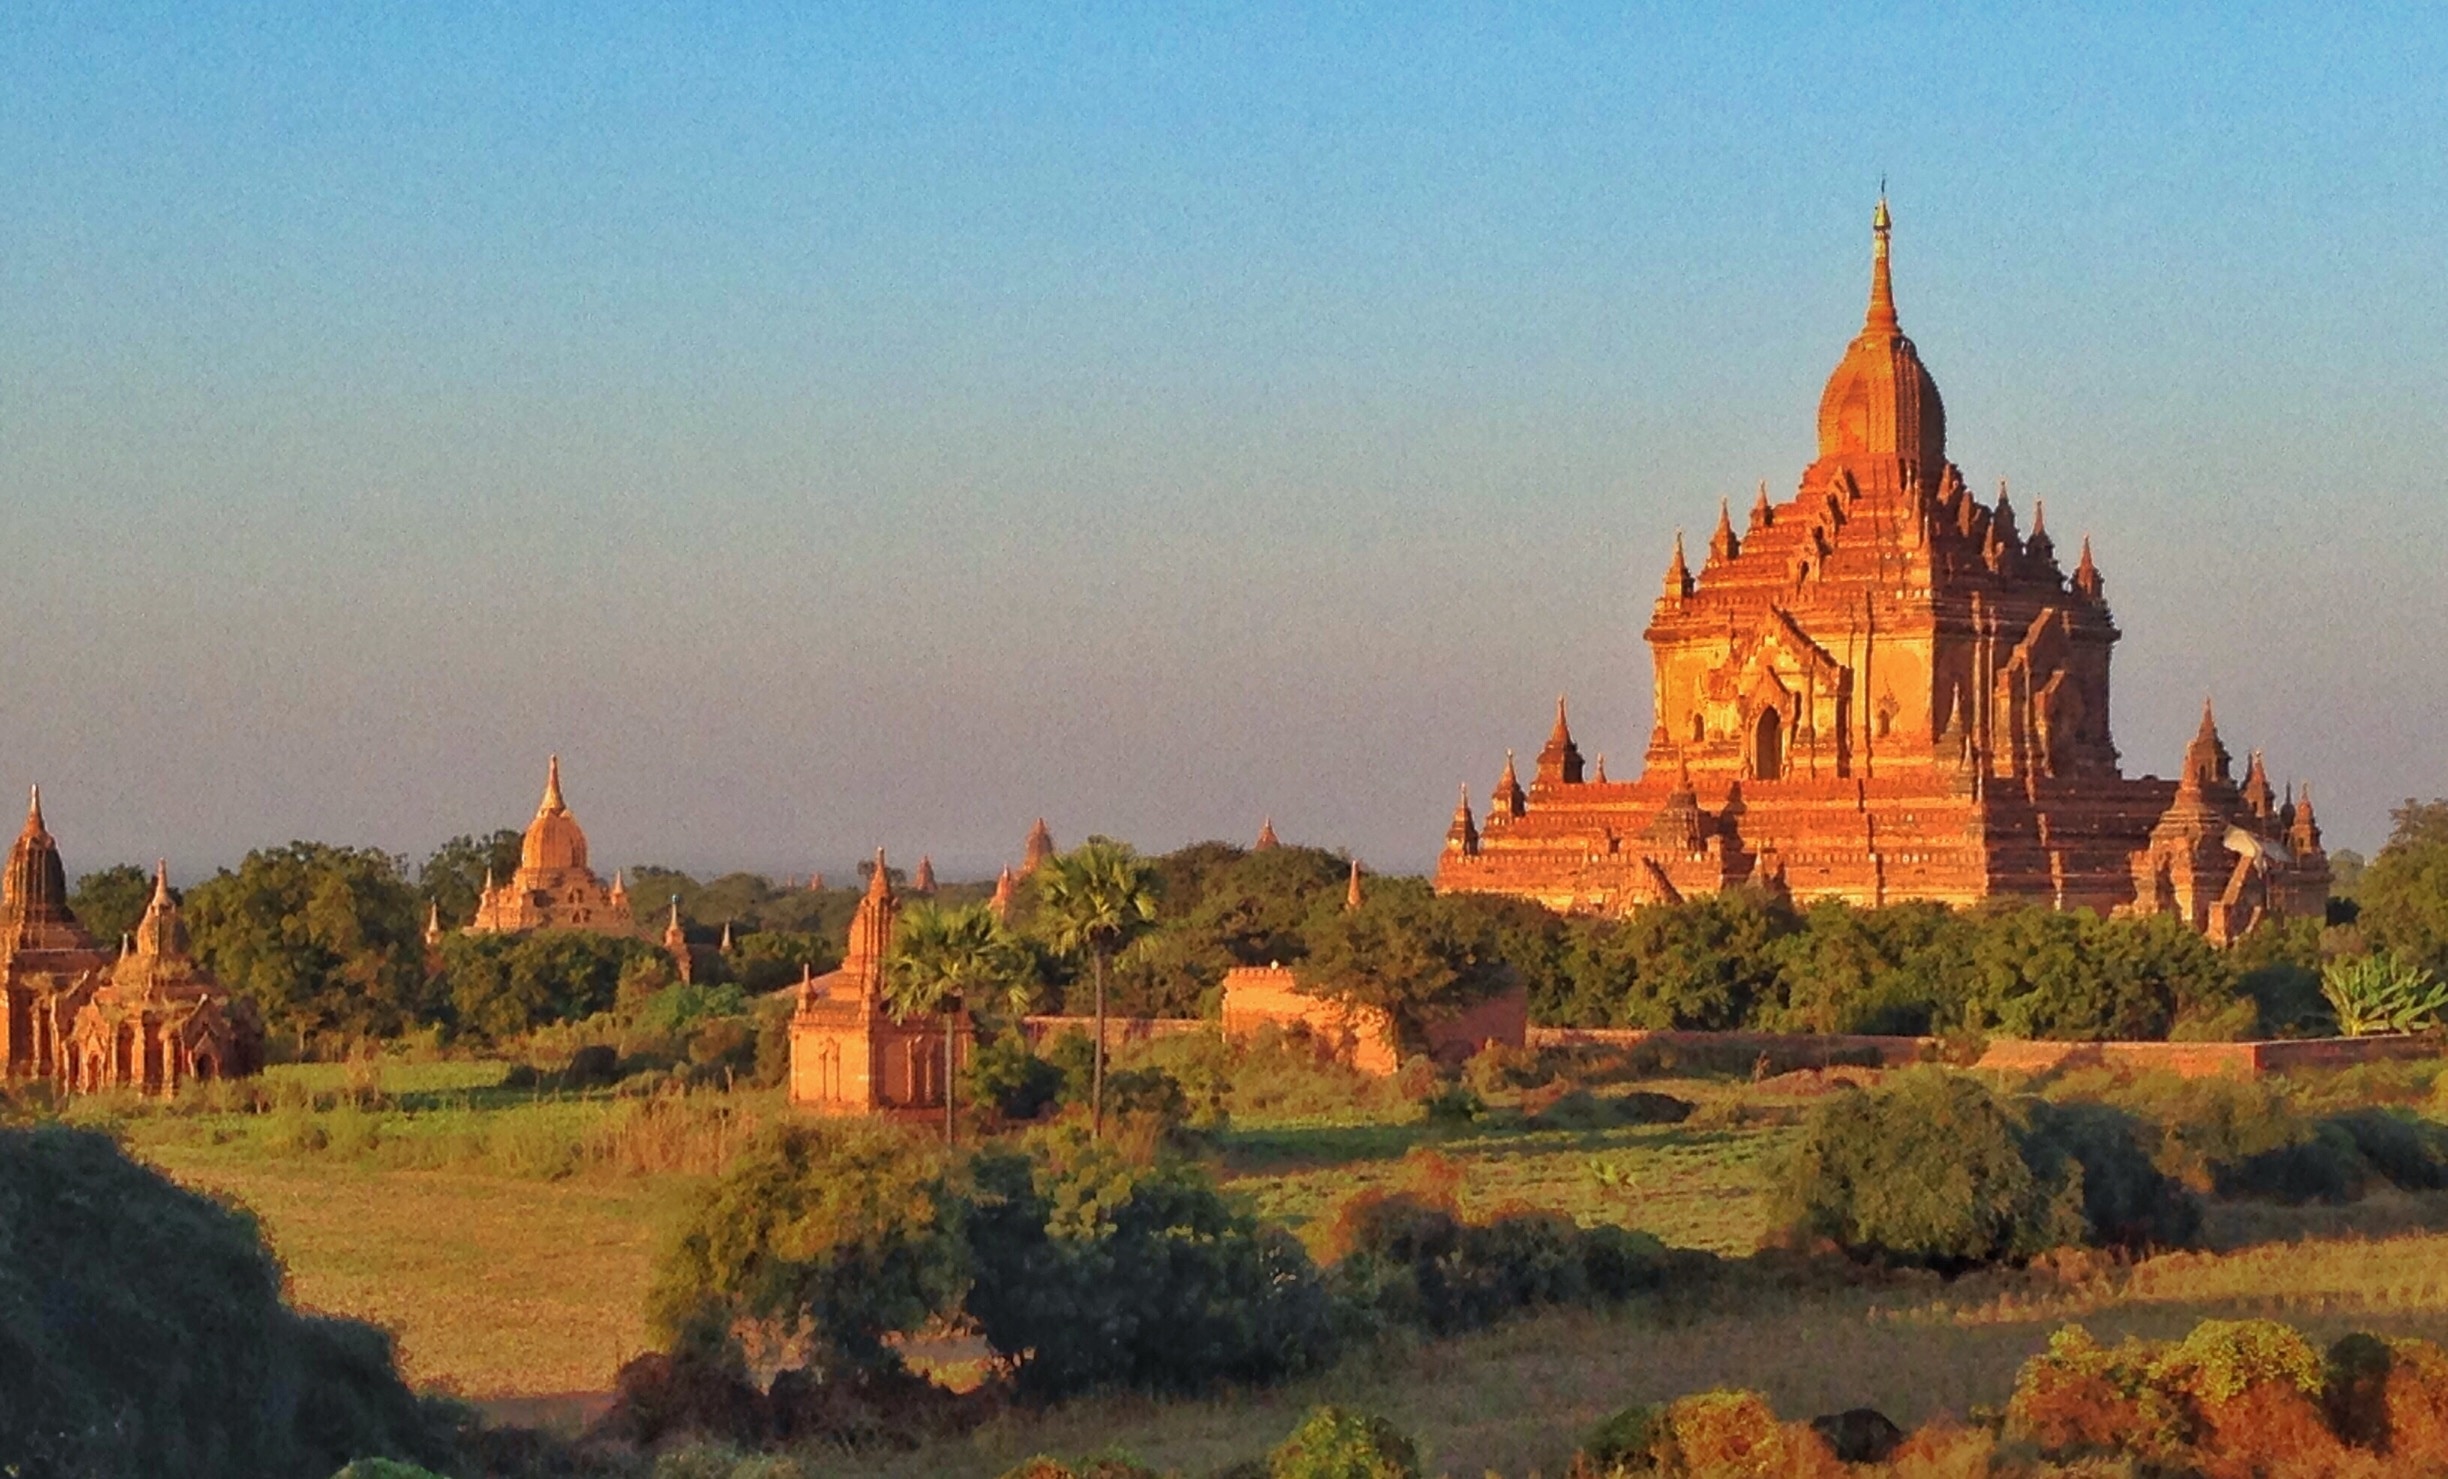 Near sunset, Old Bagan temples. #GoldenHour